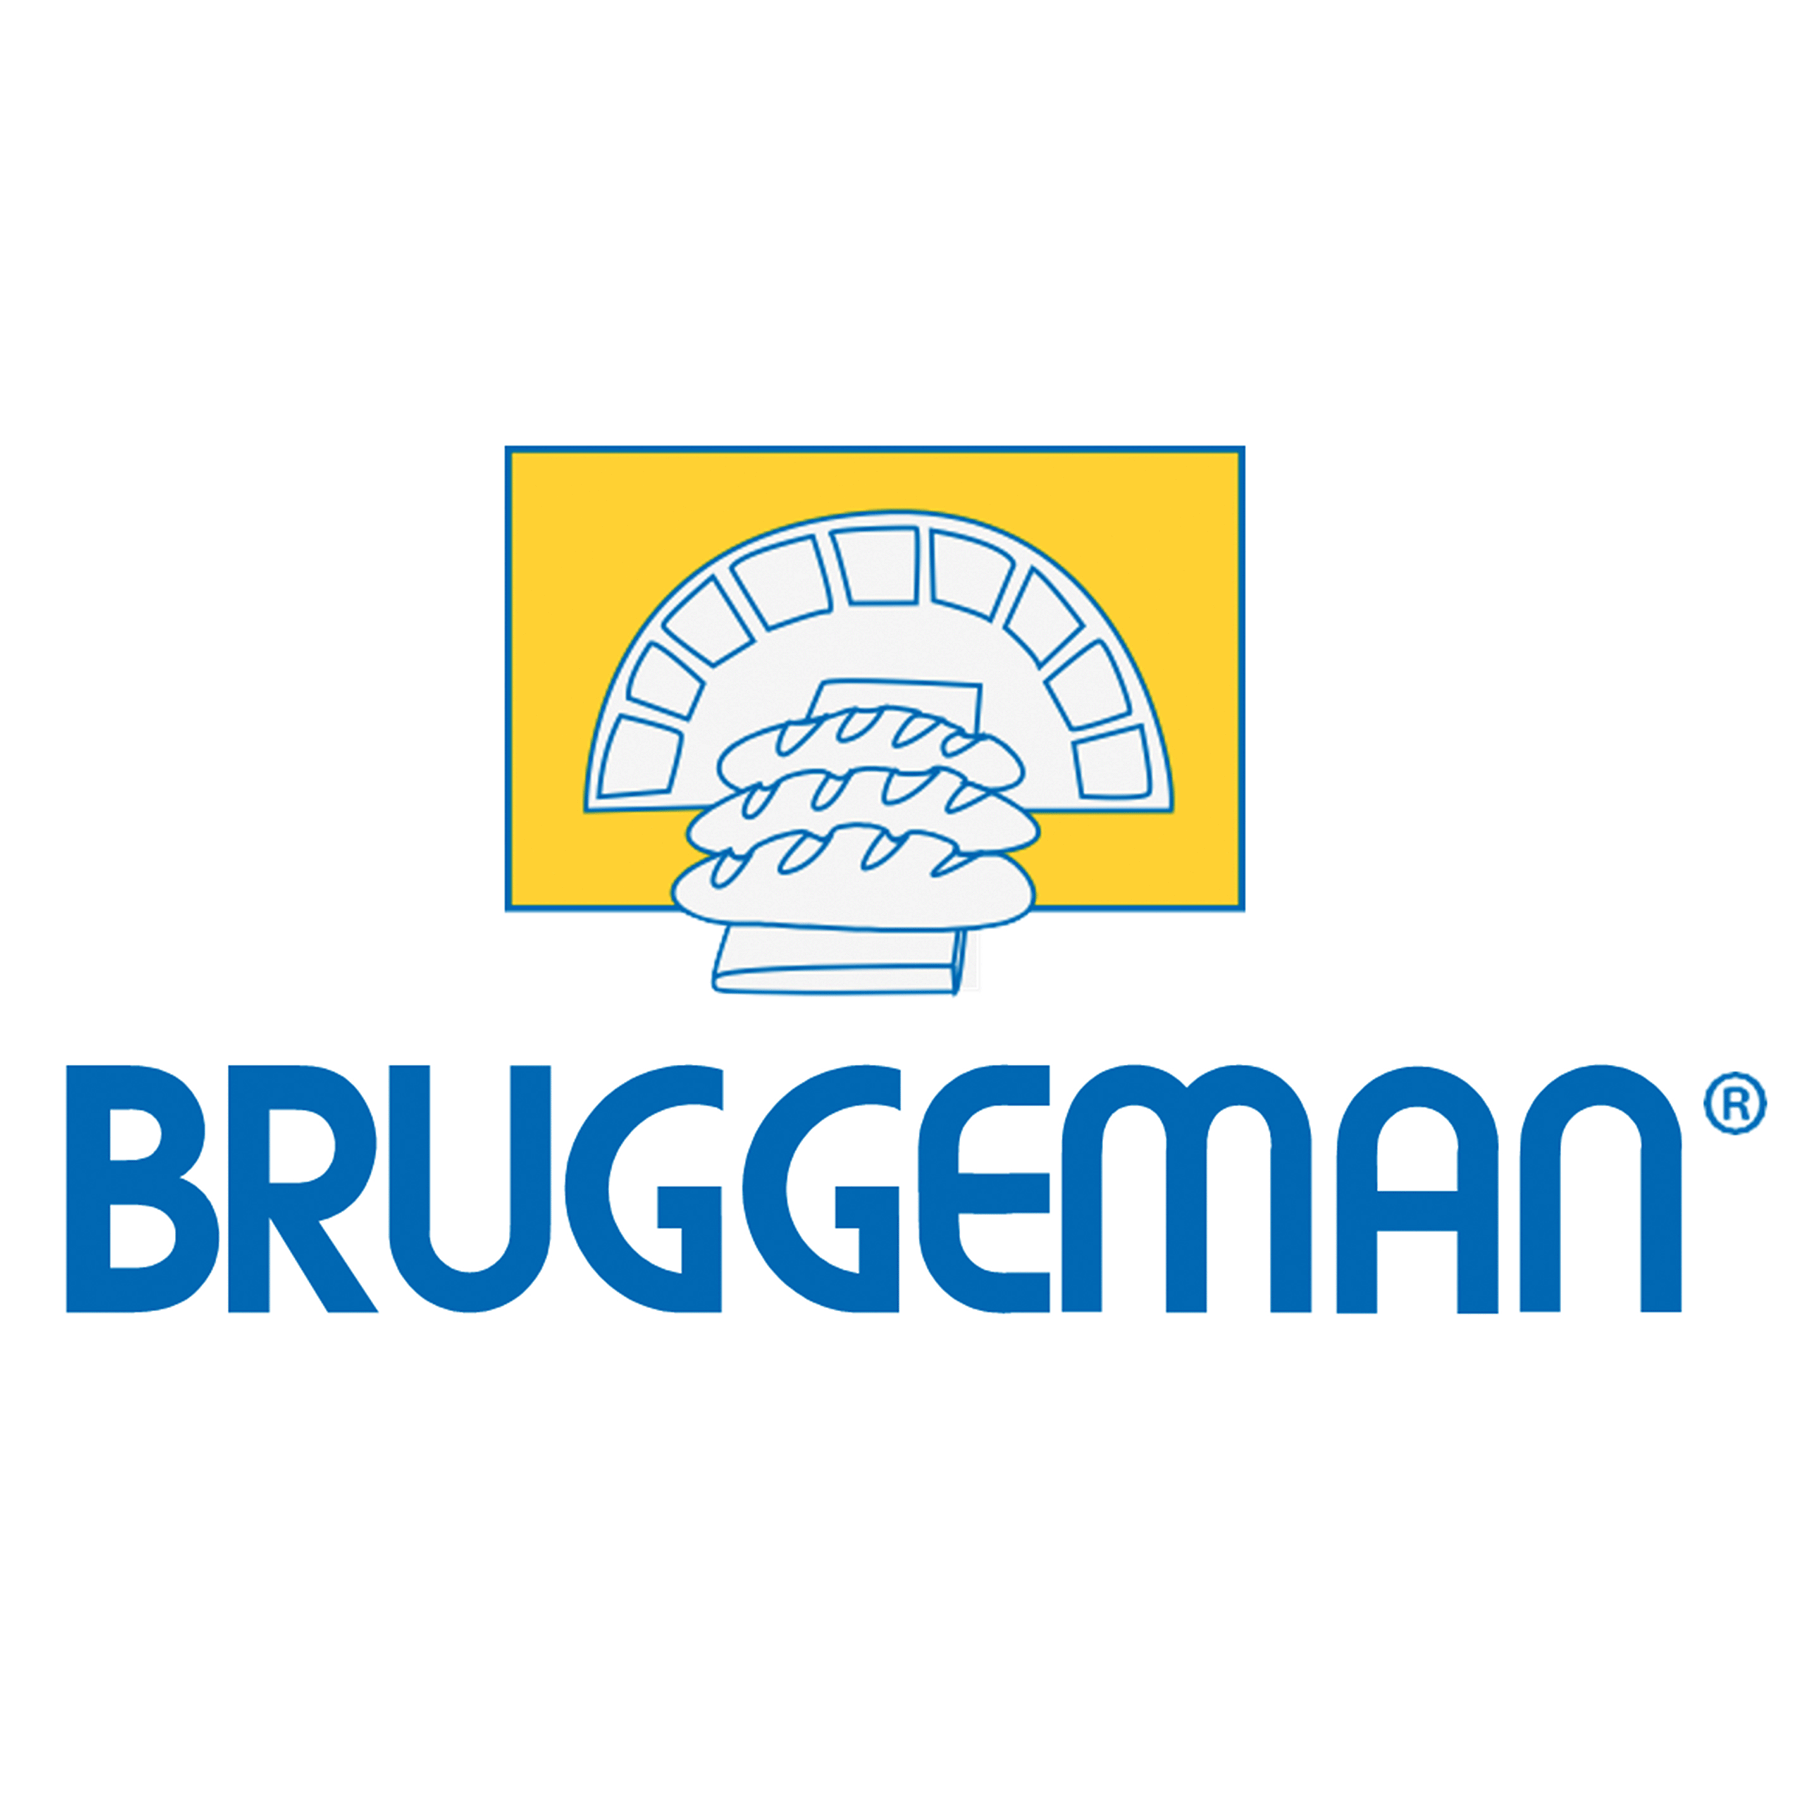 Bruggeman merk